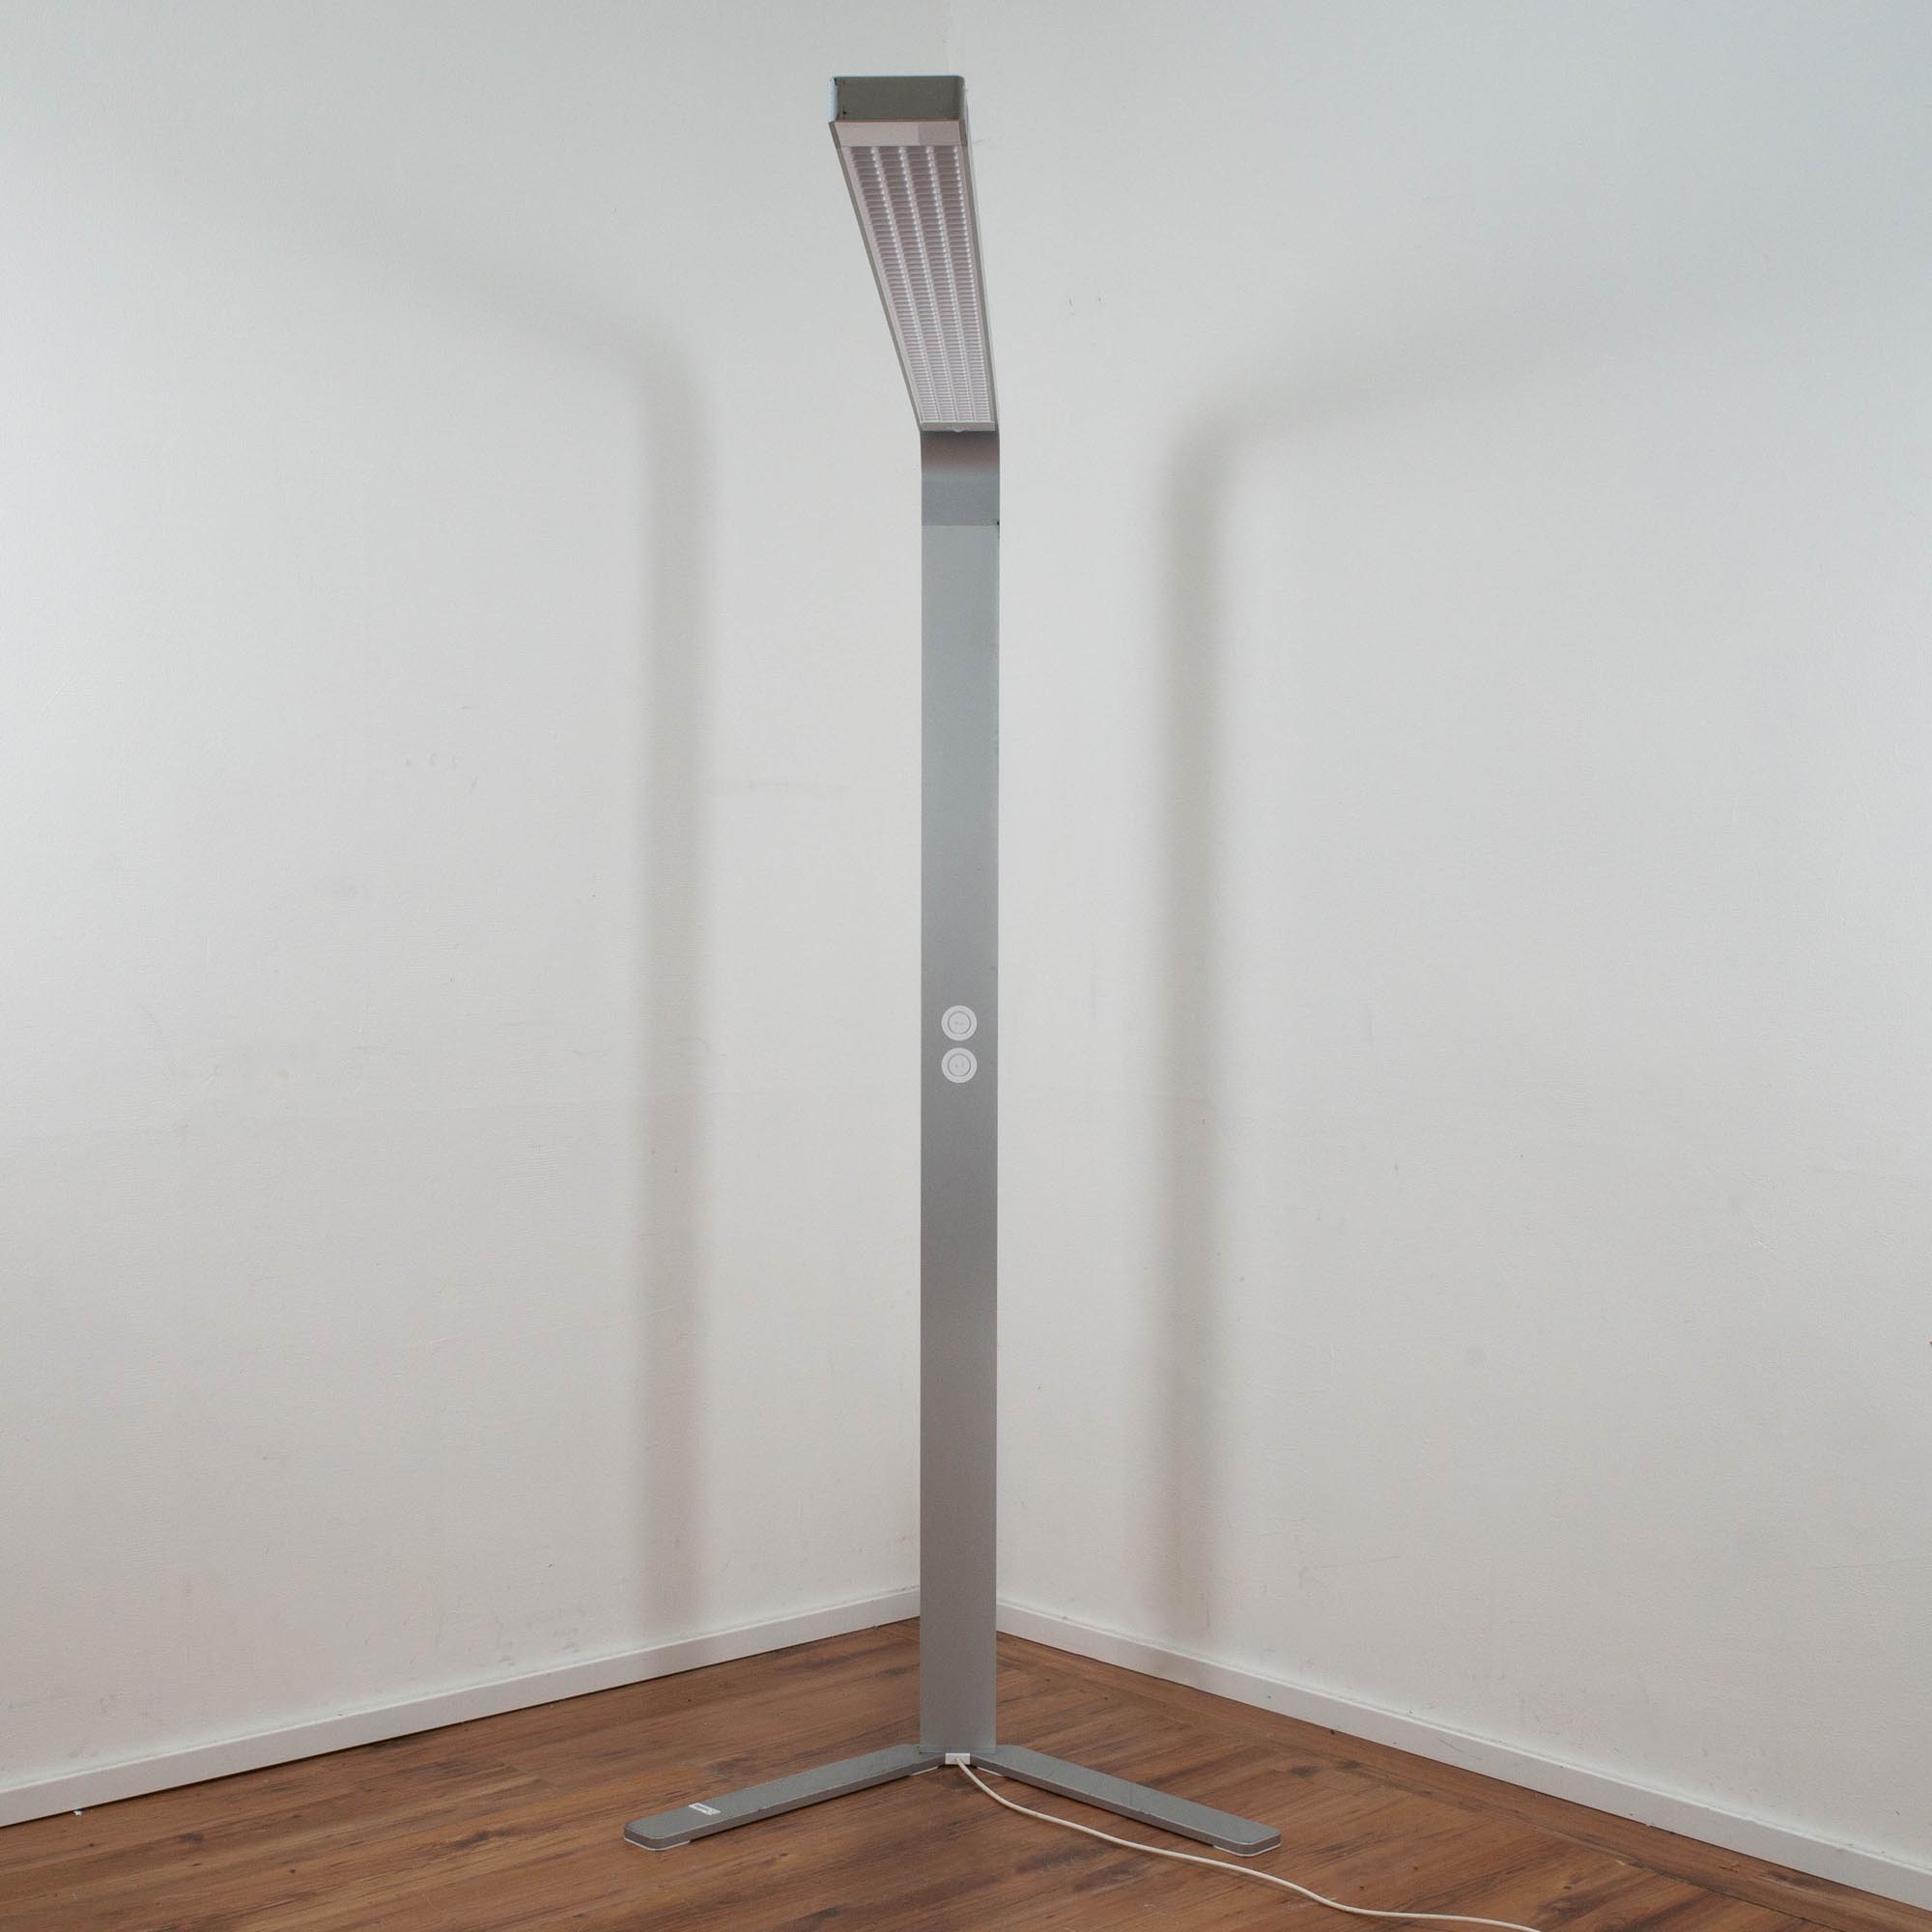 XT-A LONG von Tobias Grau - Büro-Stehlampe LED mit 180 cm Ausleger - Ausleuchtung wählbar Decke-Boden 